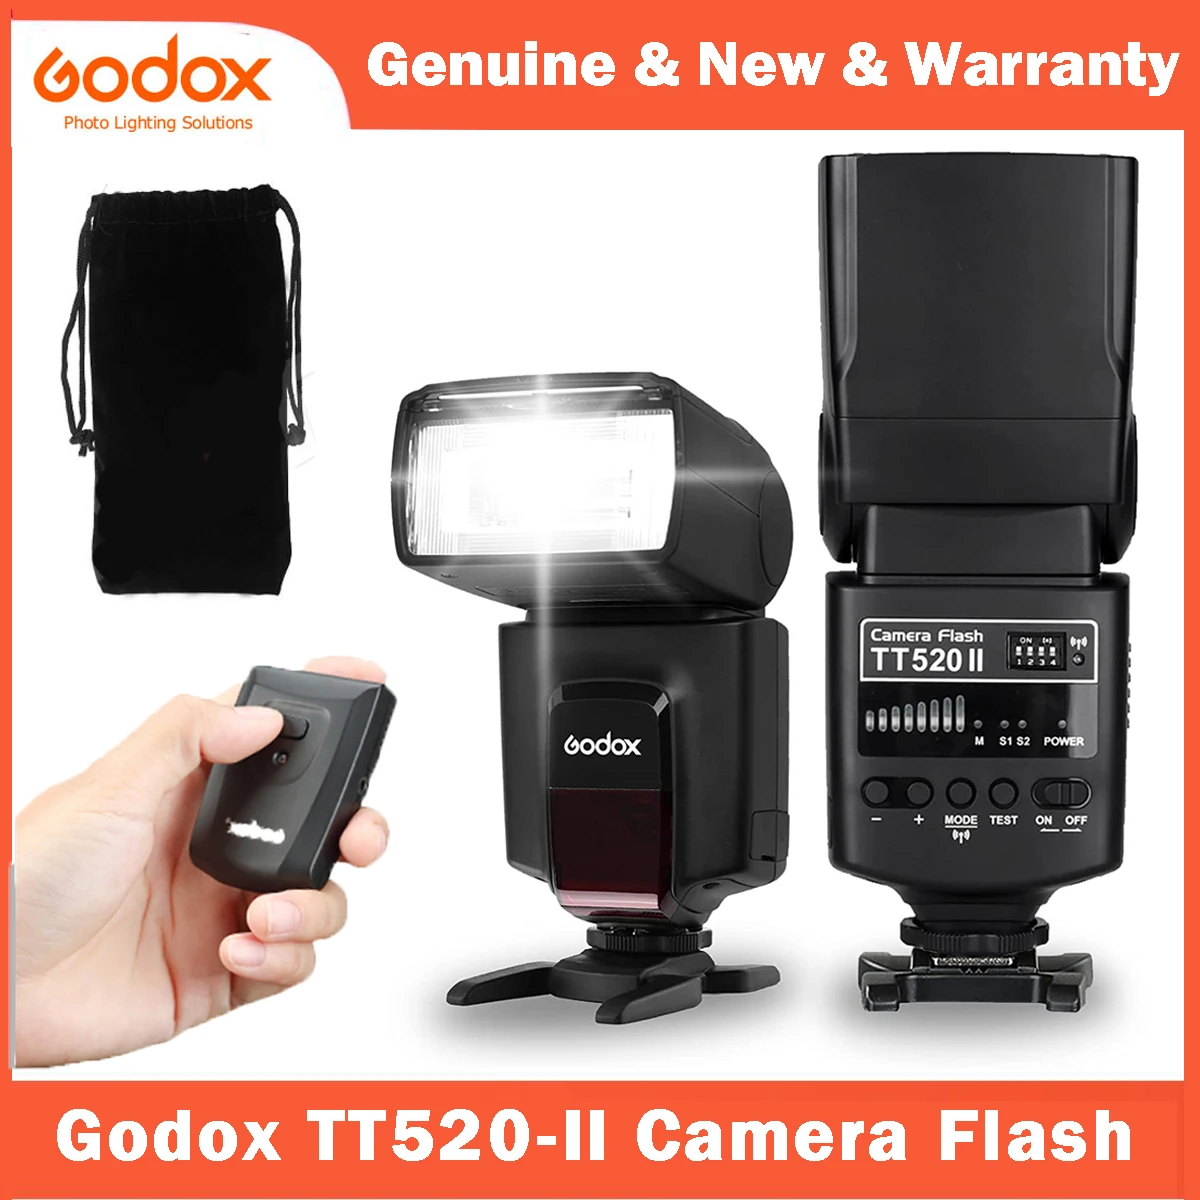 Godox Wireless Camera Flash Speedlite Thinklite TT520II with Build-in 433MHz Signal for Canon Nikon Pentax Sony Fuji Olympus DSL